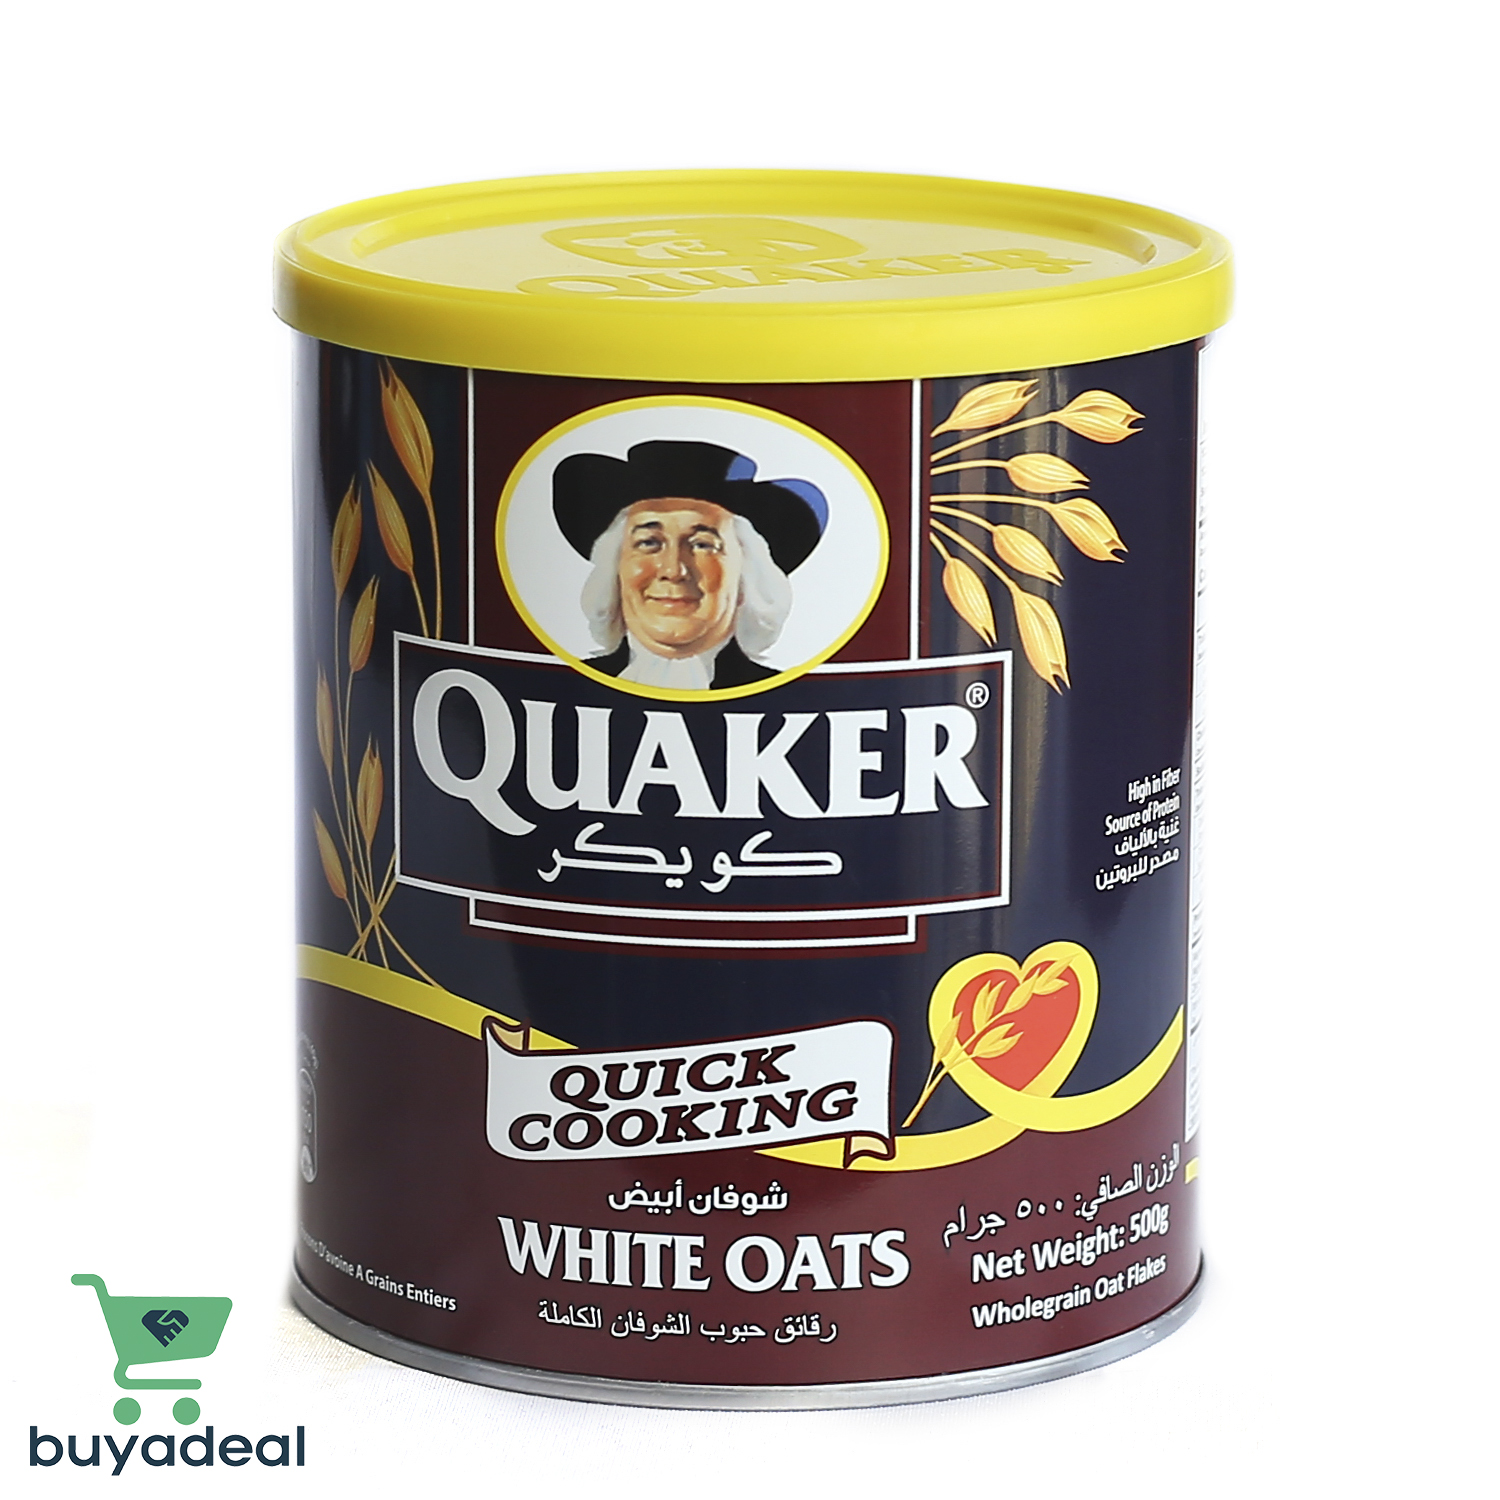 Buyadeal Product Quacker White Oats 500g